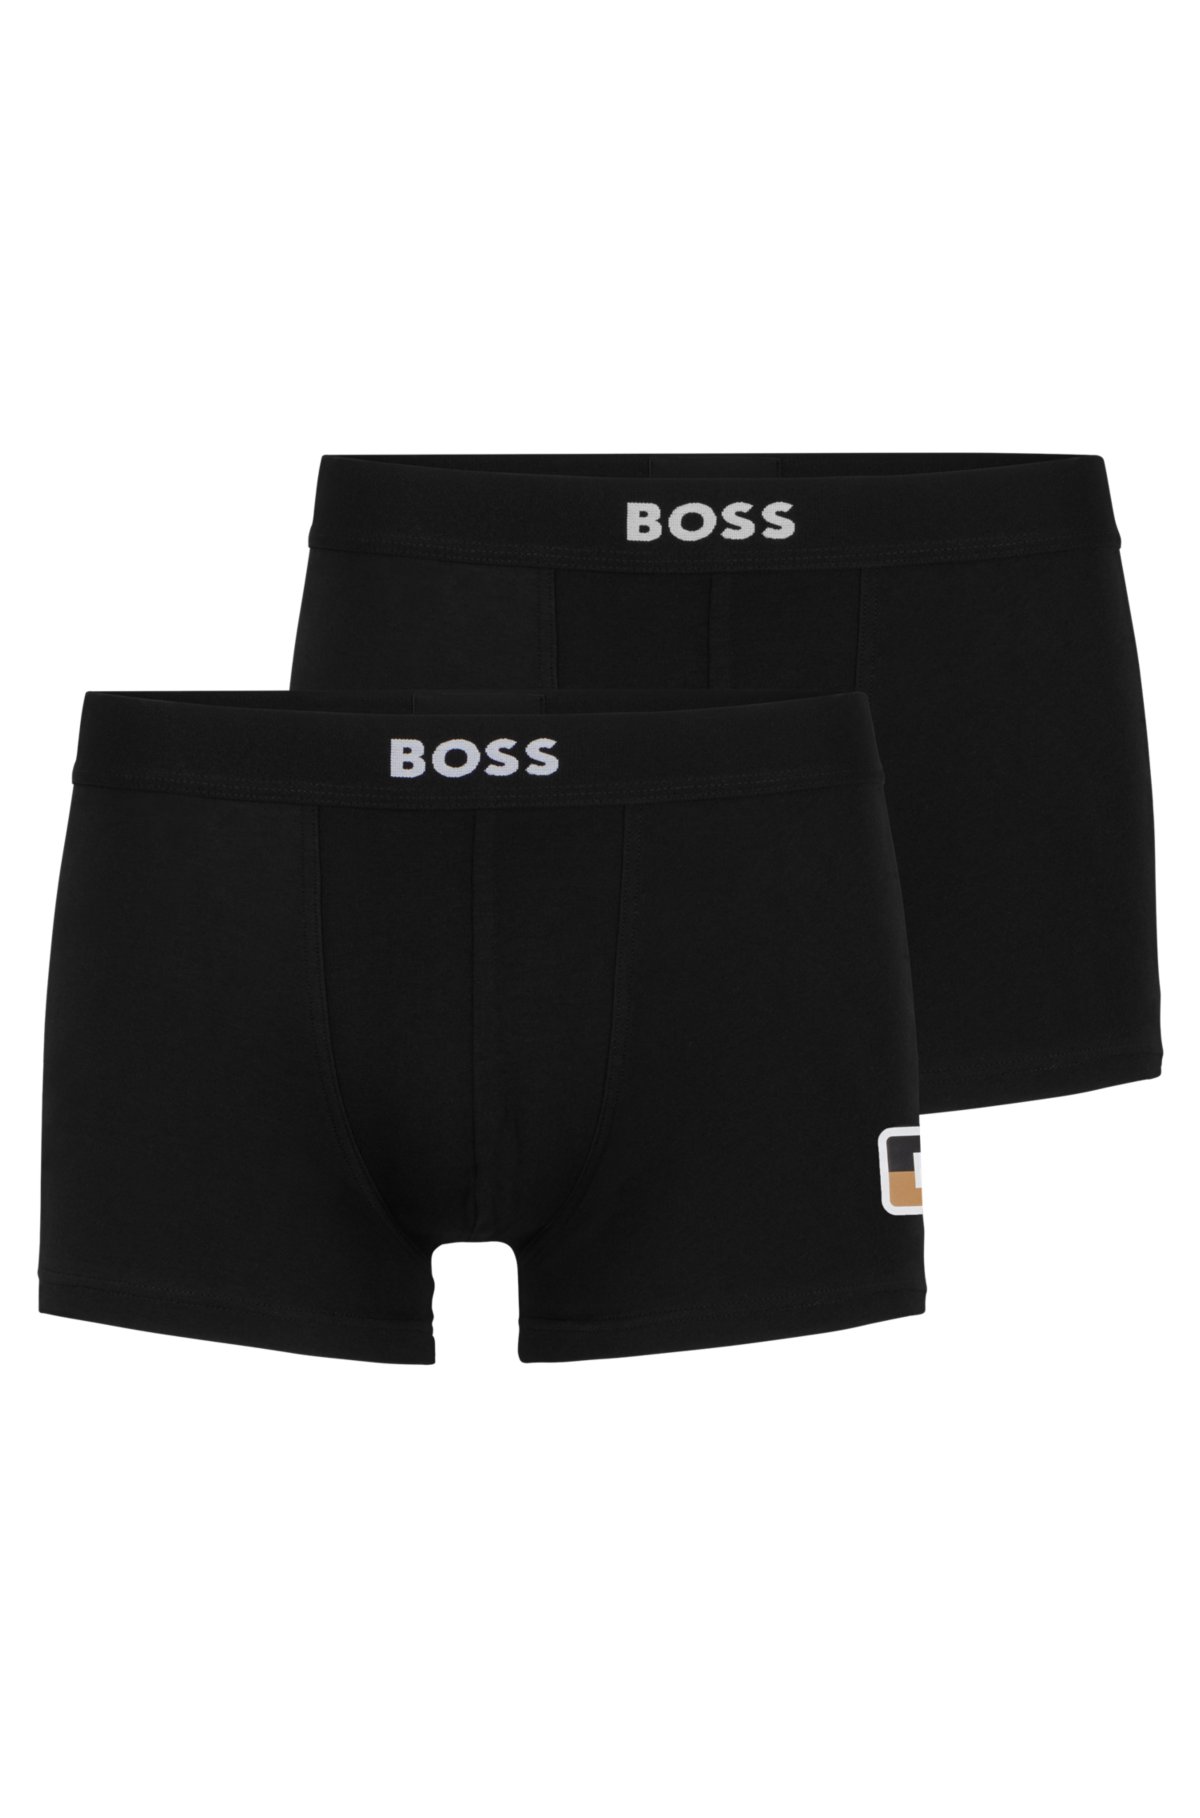 Buy Big Boss Men's Cotton Briefs (Pack of 4) at